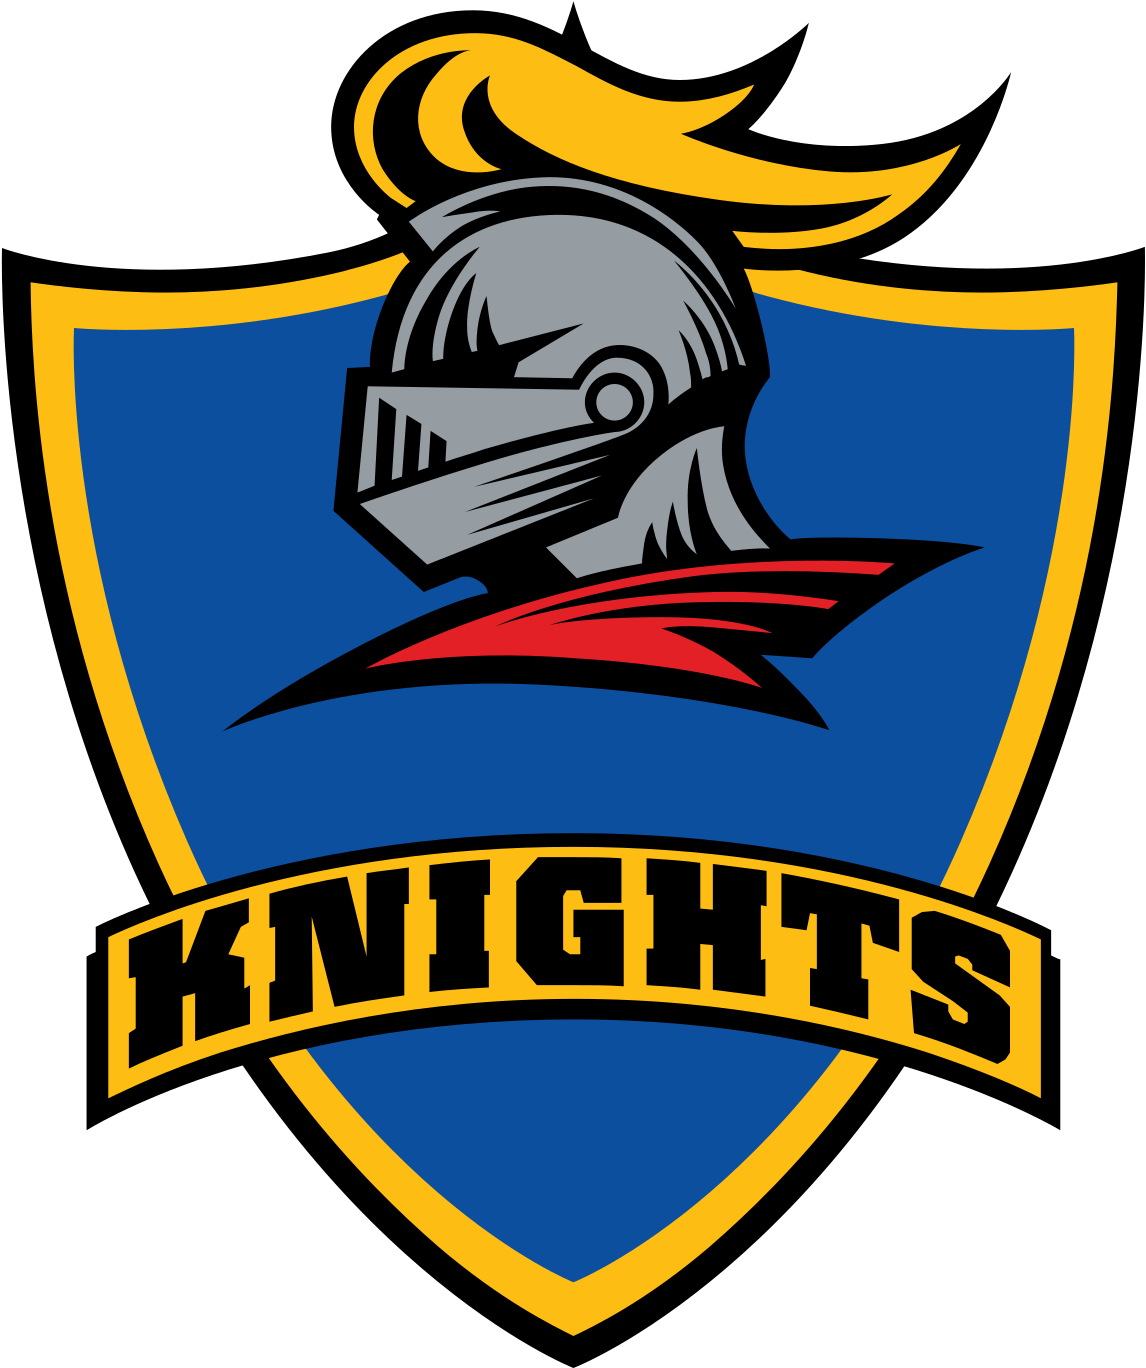 Vkb Knights (1200x1440)